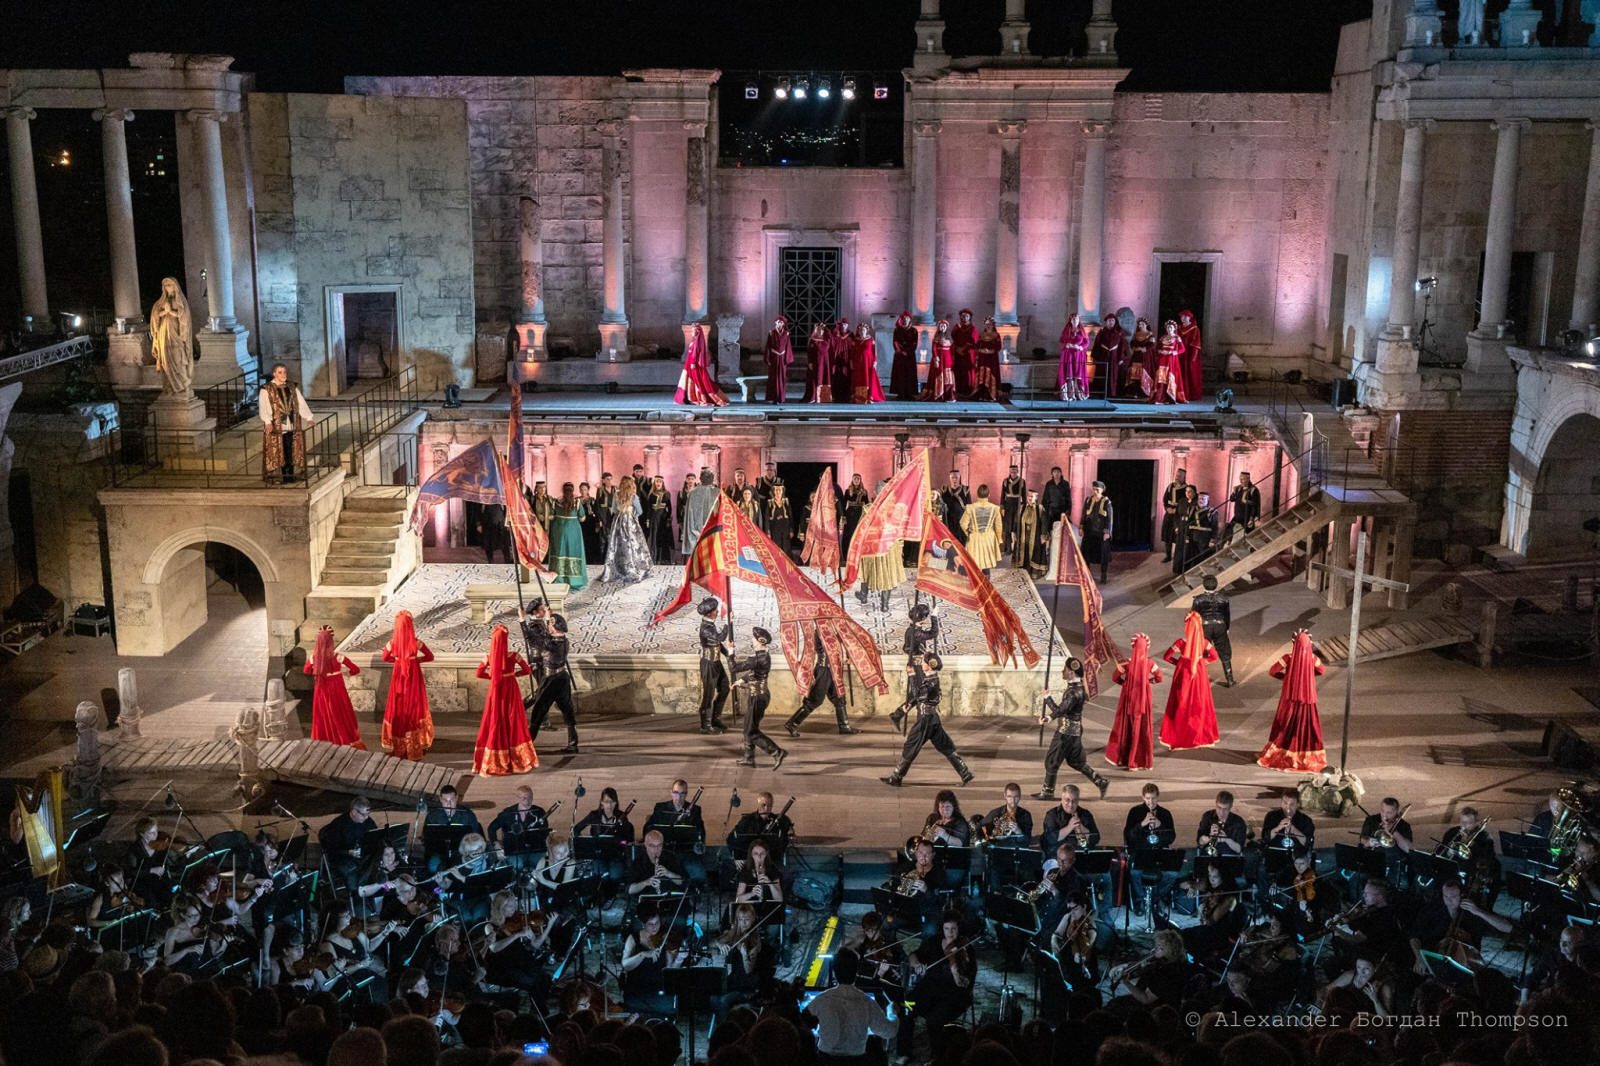 Otello in Plotdiv, July 2019, starring Jos Cura.